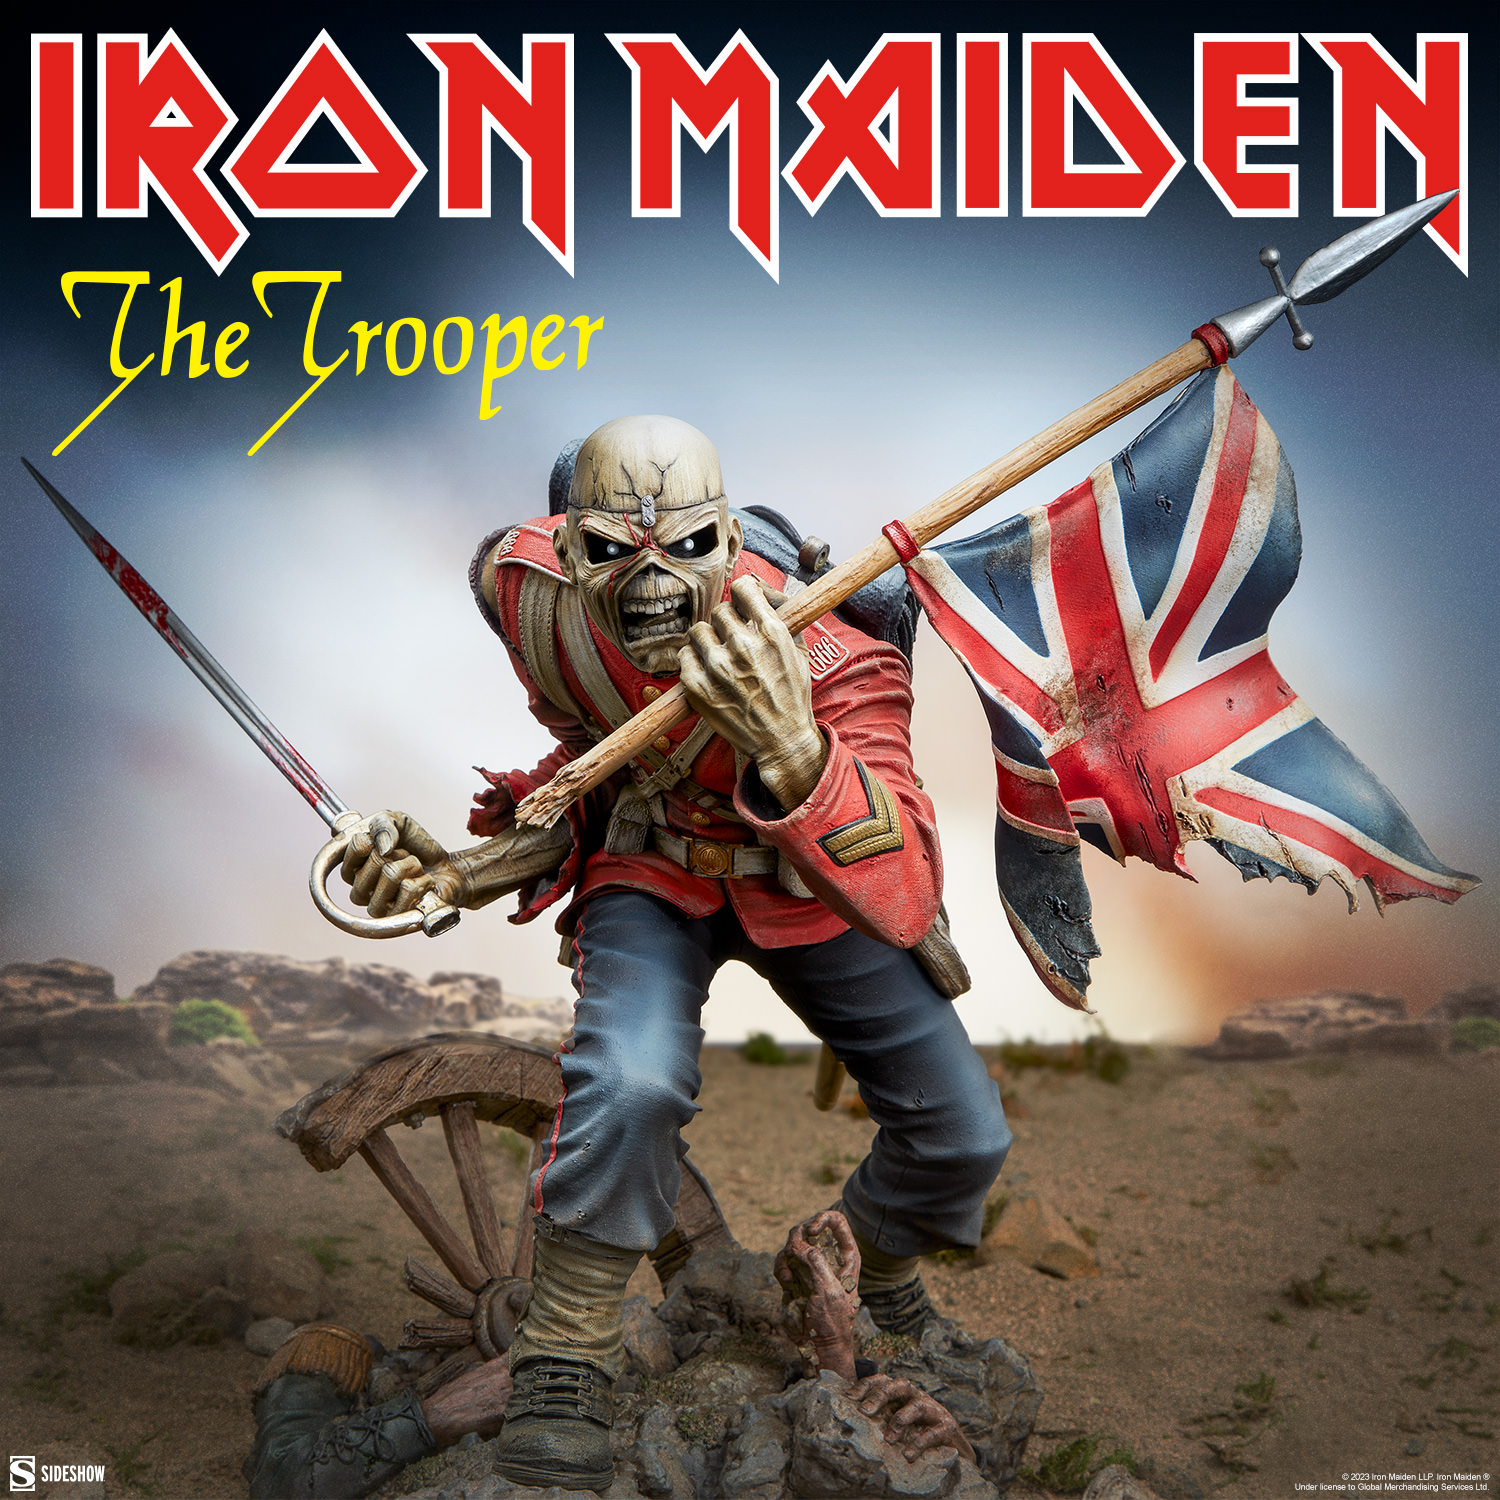 Figura Épica The Trooper de Sideshow - Iron Maiden Fans Internacional